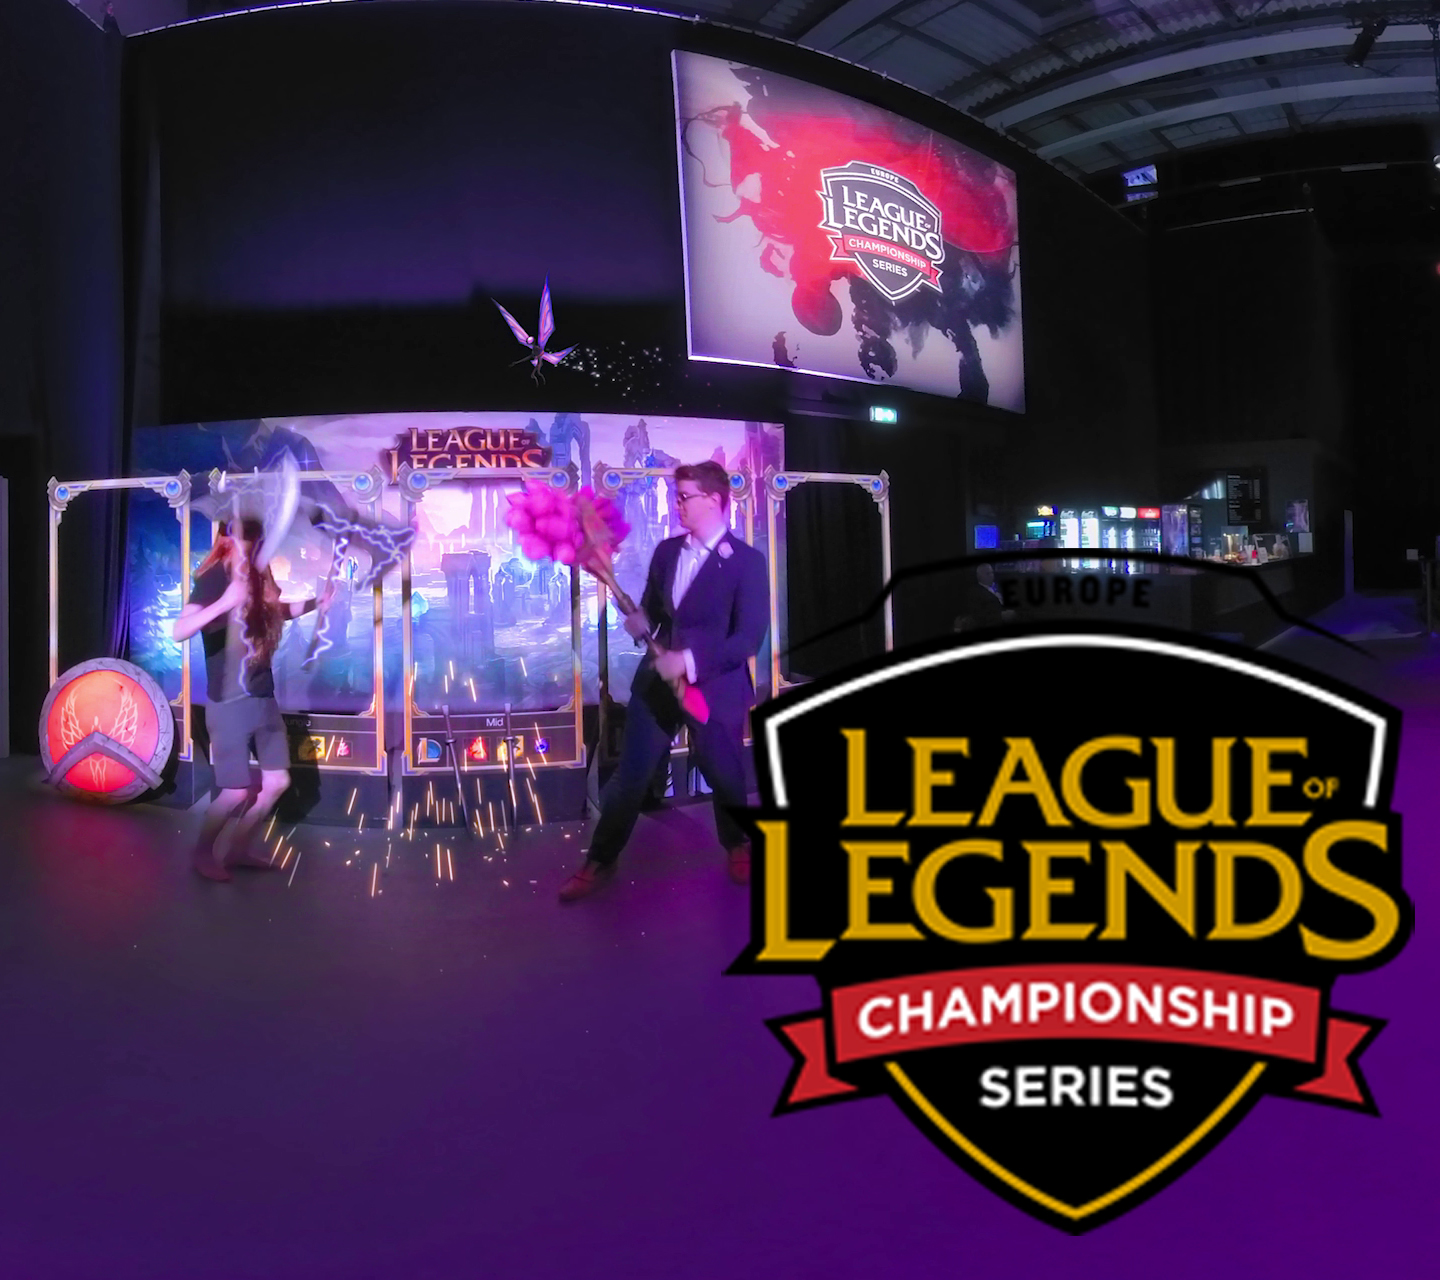 European League of Legends Championship Series